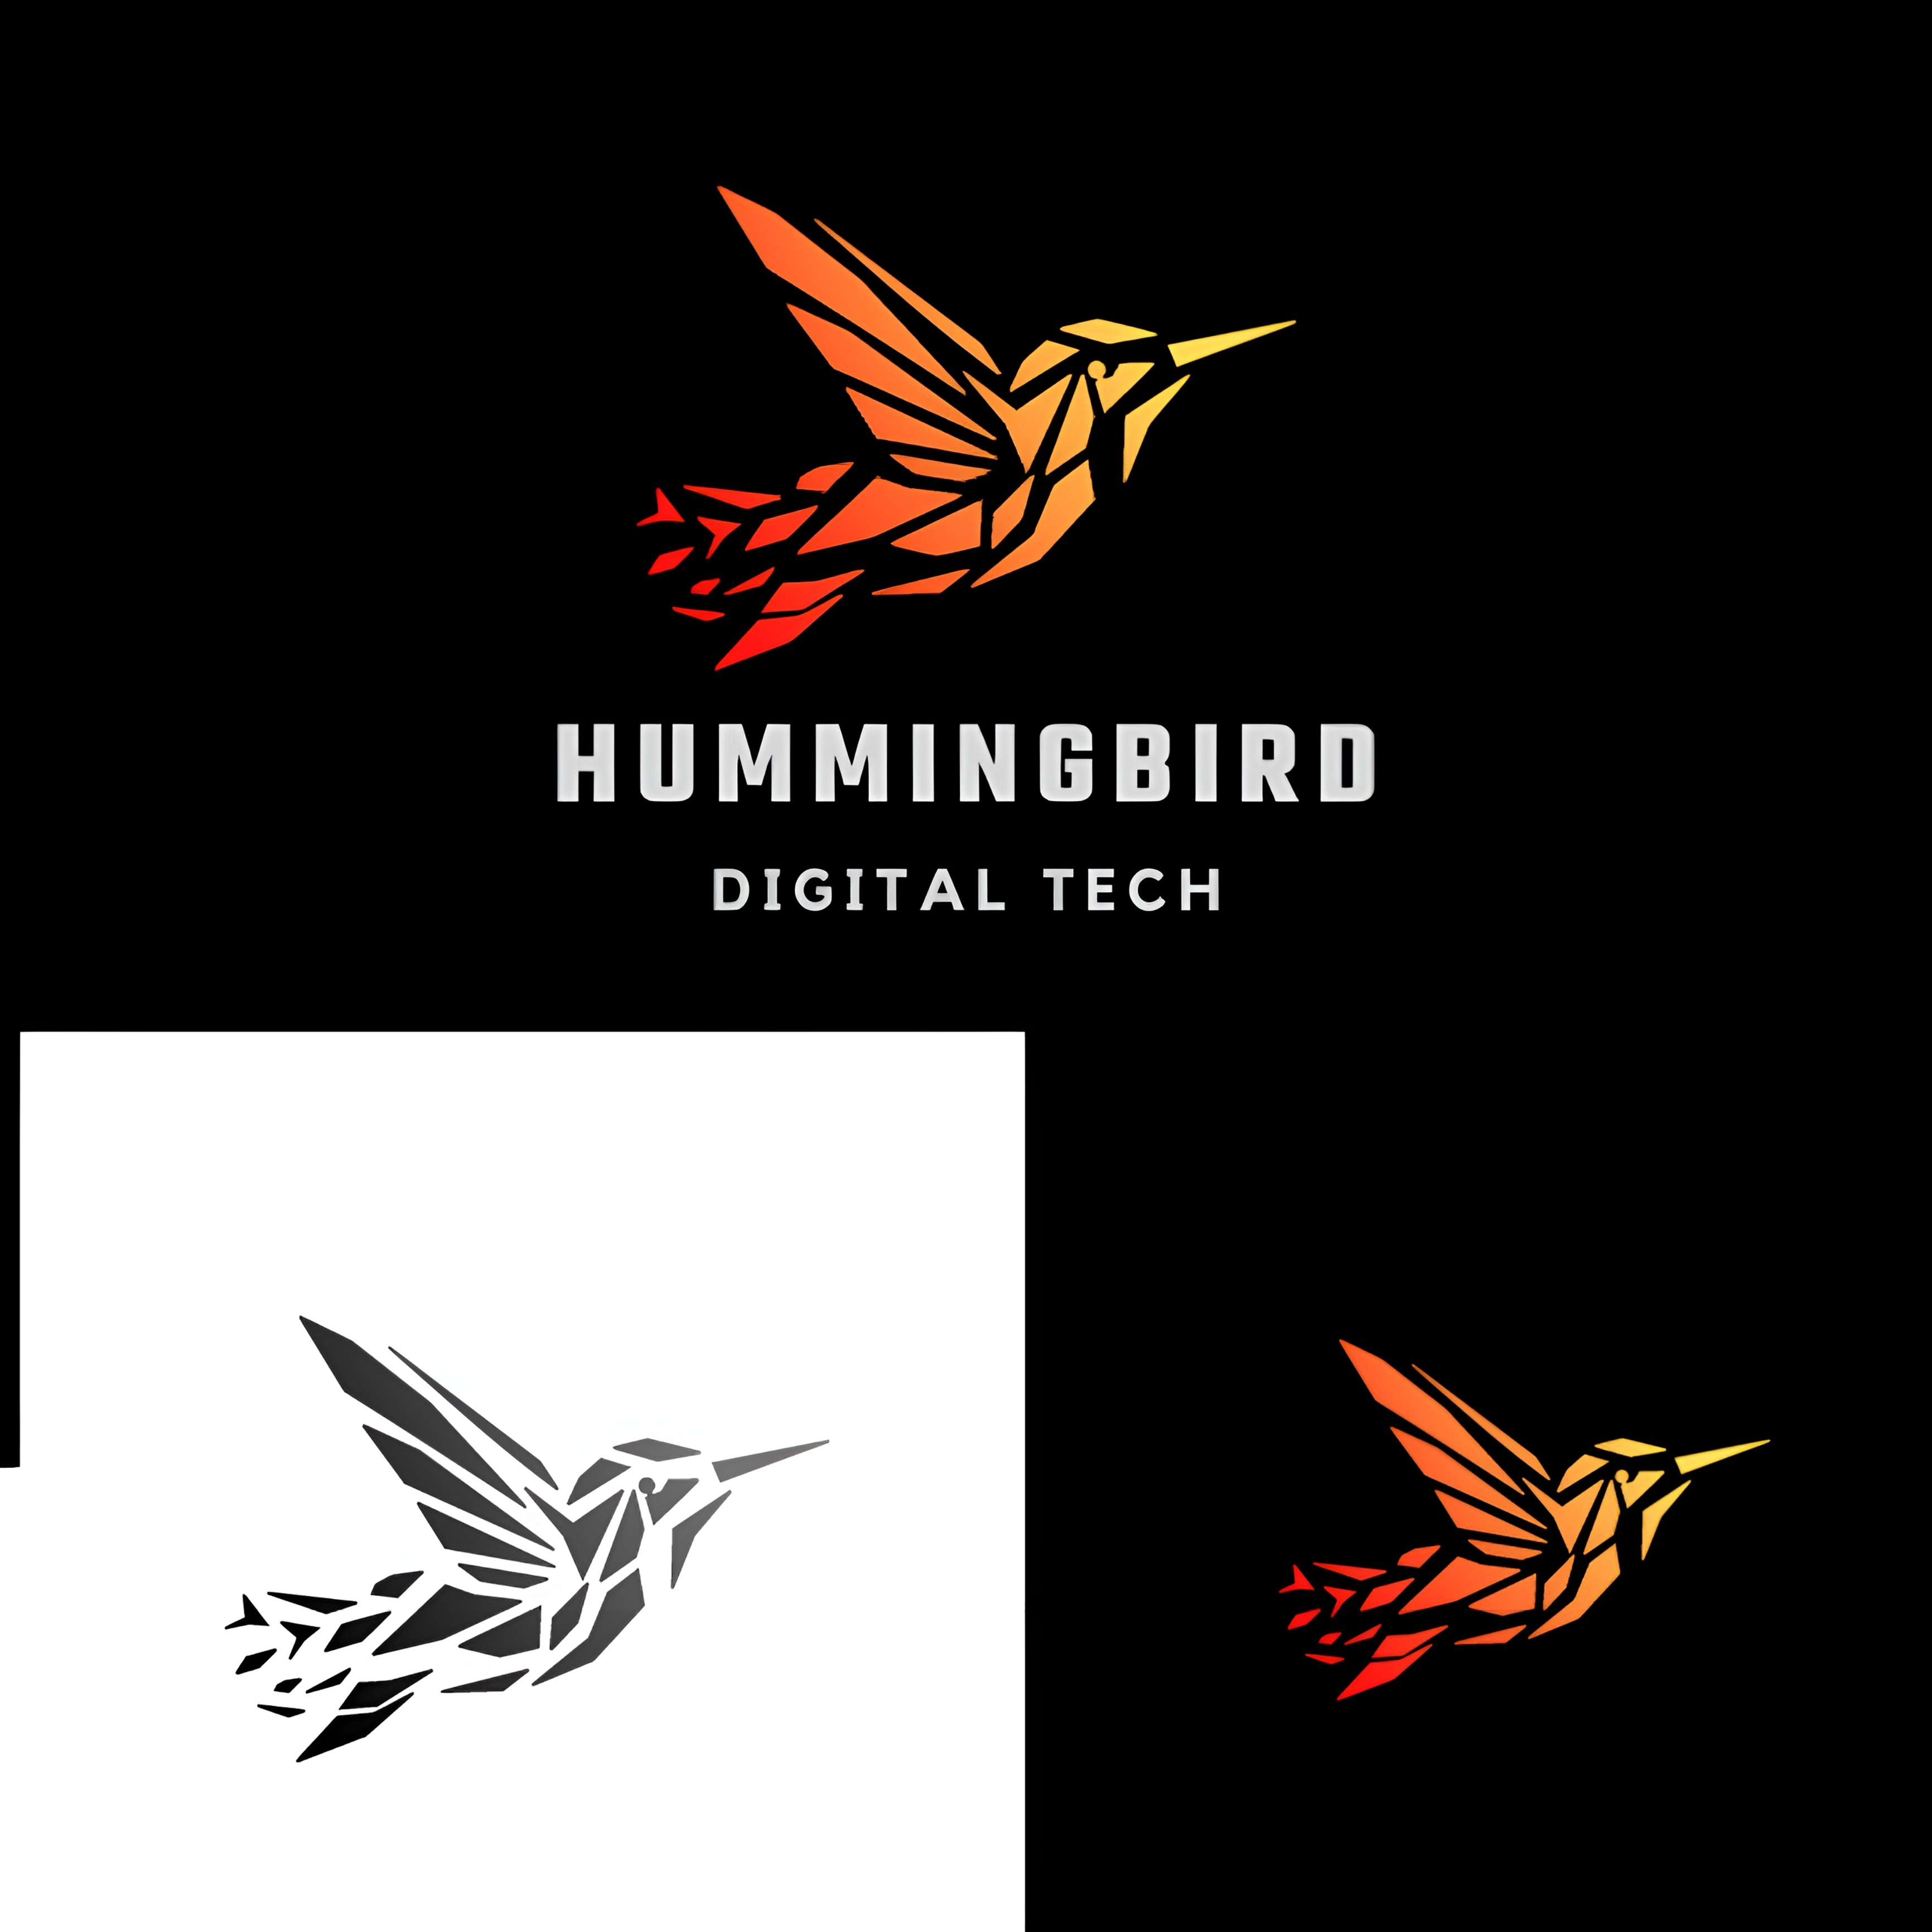 Hummingbird Logo Isolated Hummingbird On White Background Stock  Illustration - Download Image Now - iStock